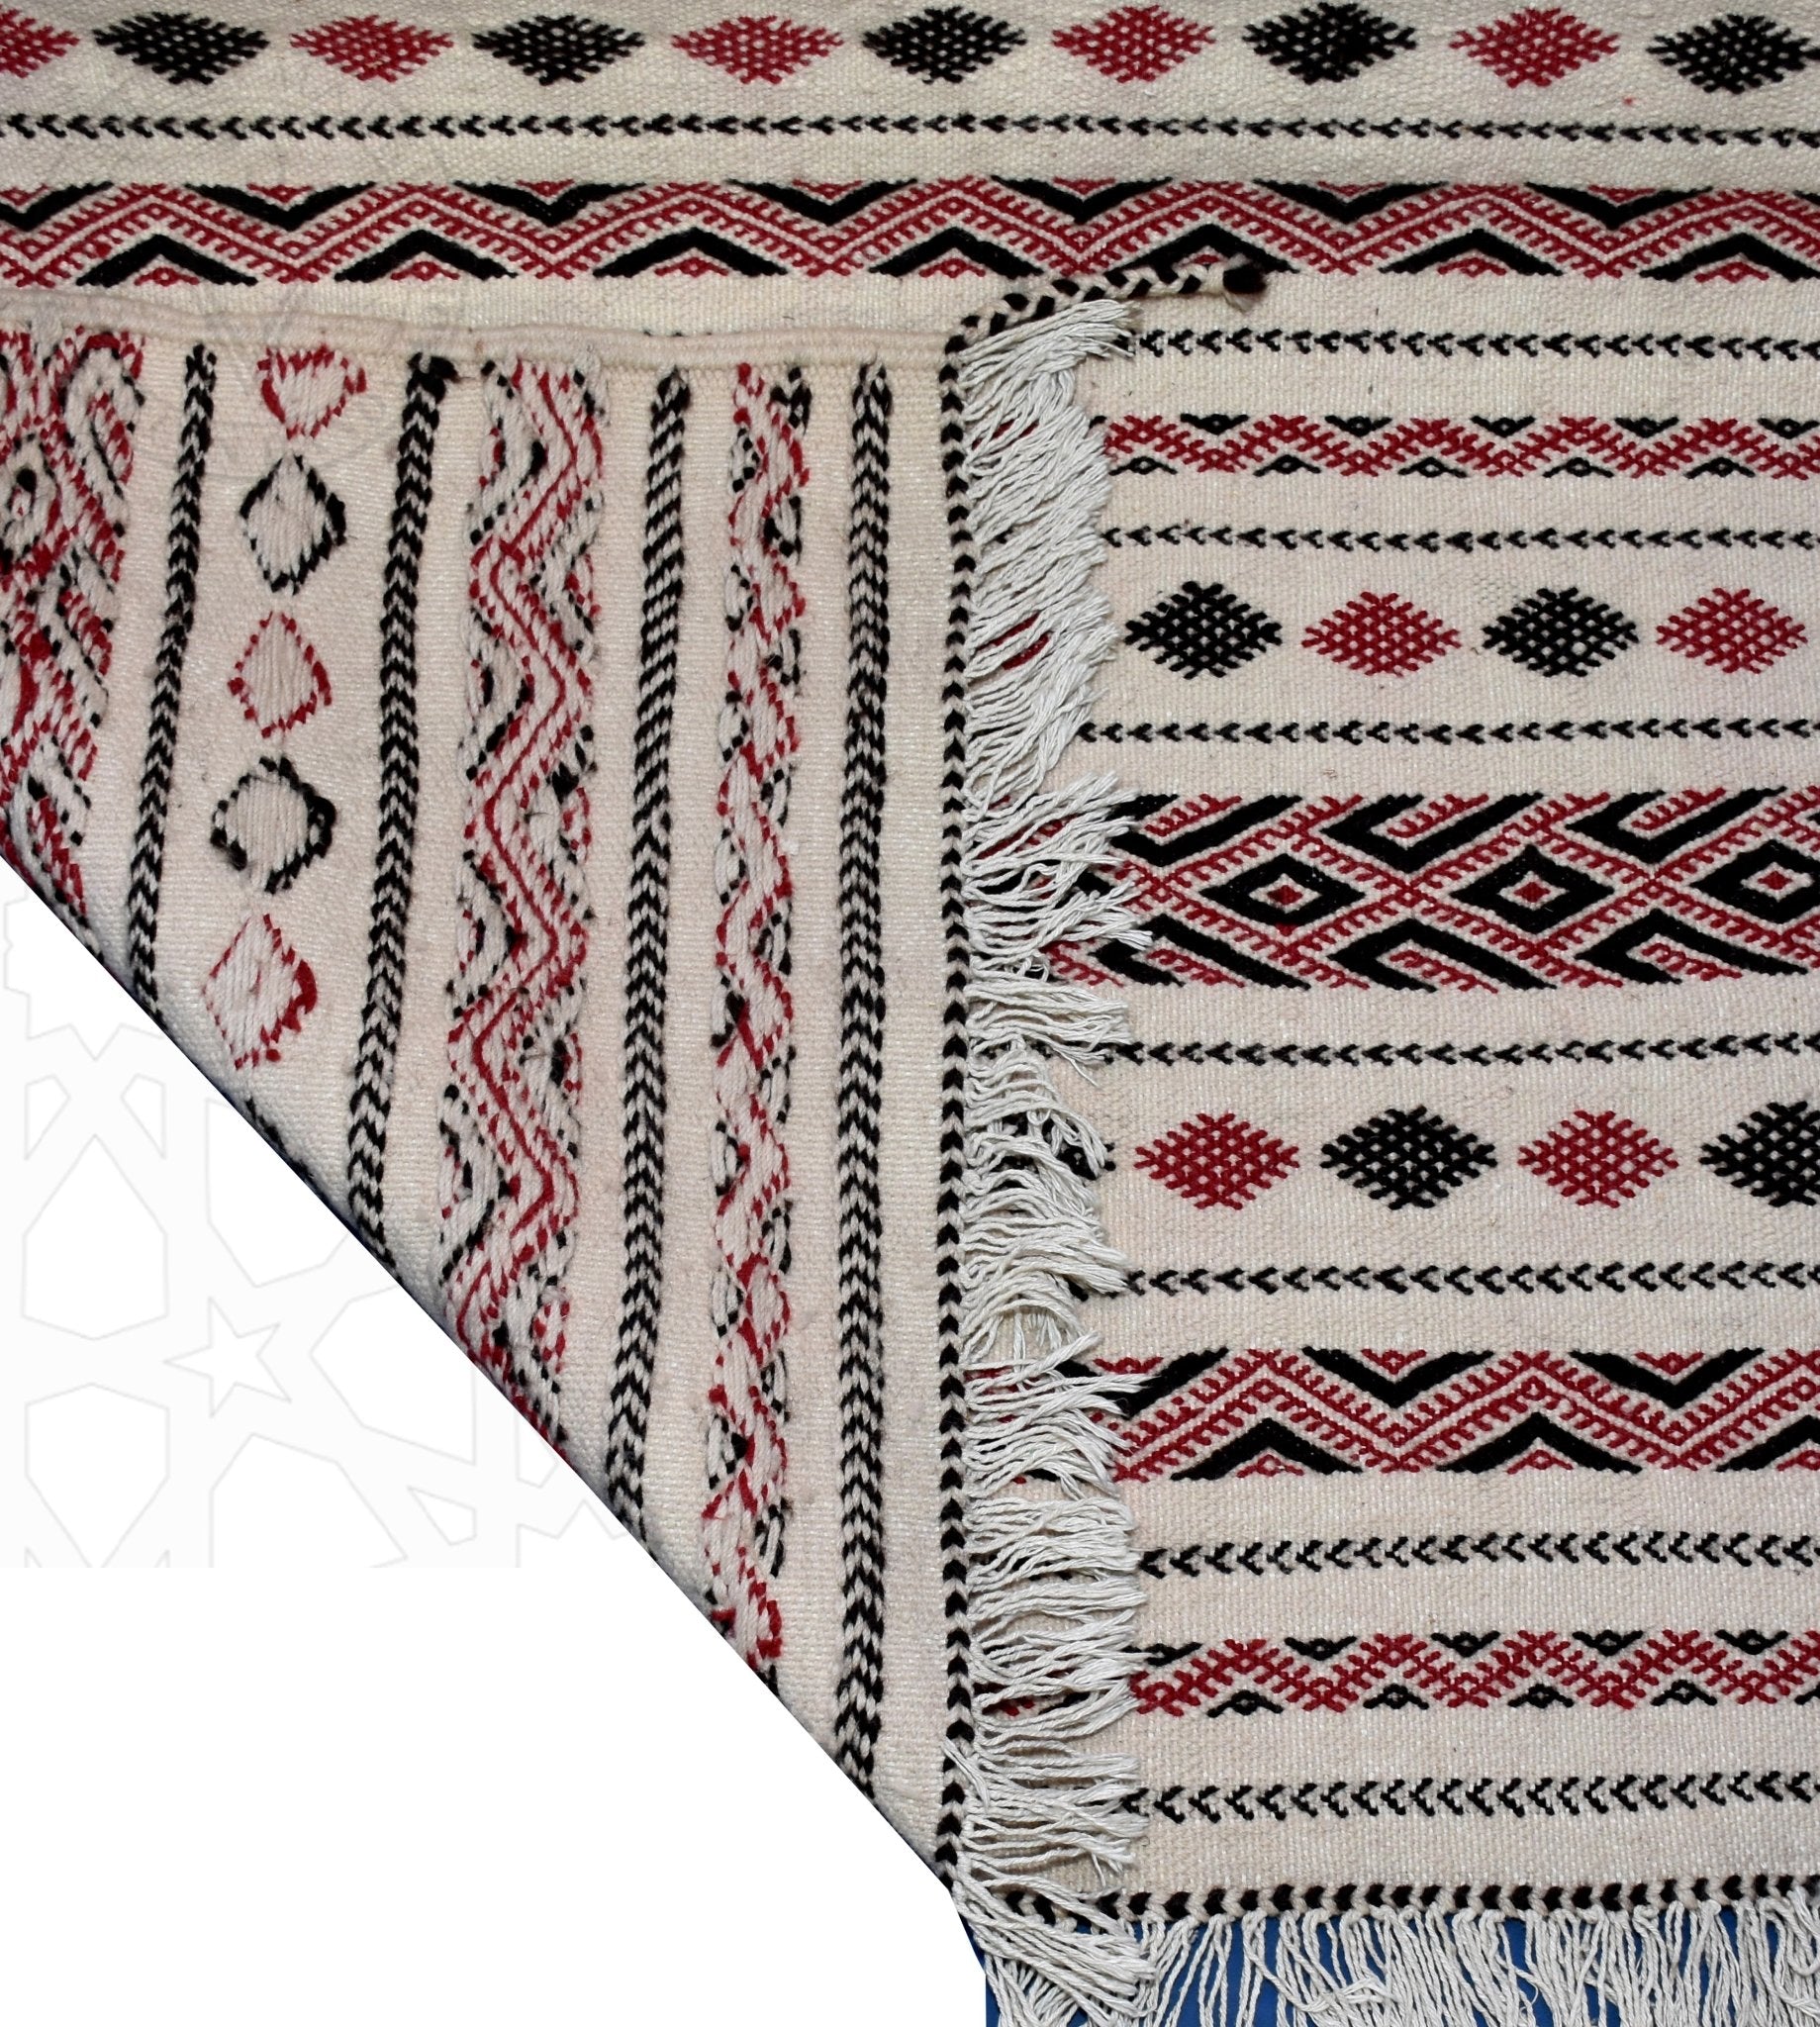 Flatweave kilim hanbal Moroccan rug - 3.78 x 5.91 ft / 115 x 180 cm - Berbers Market